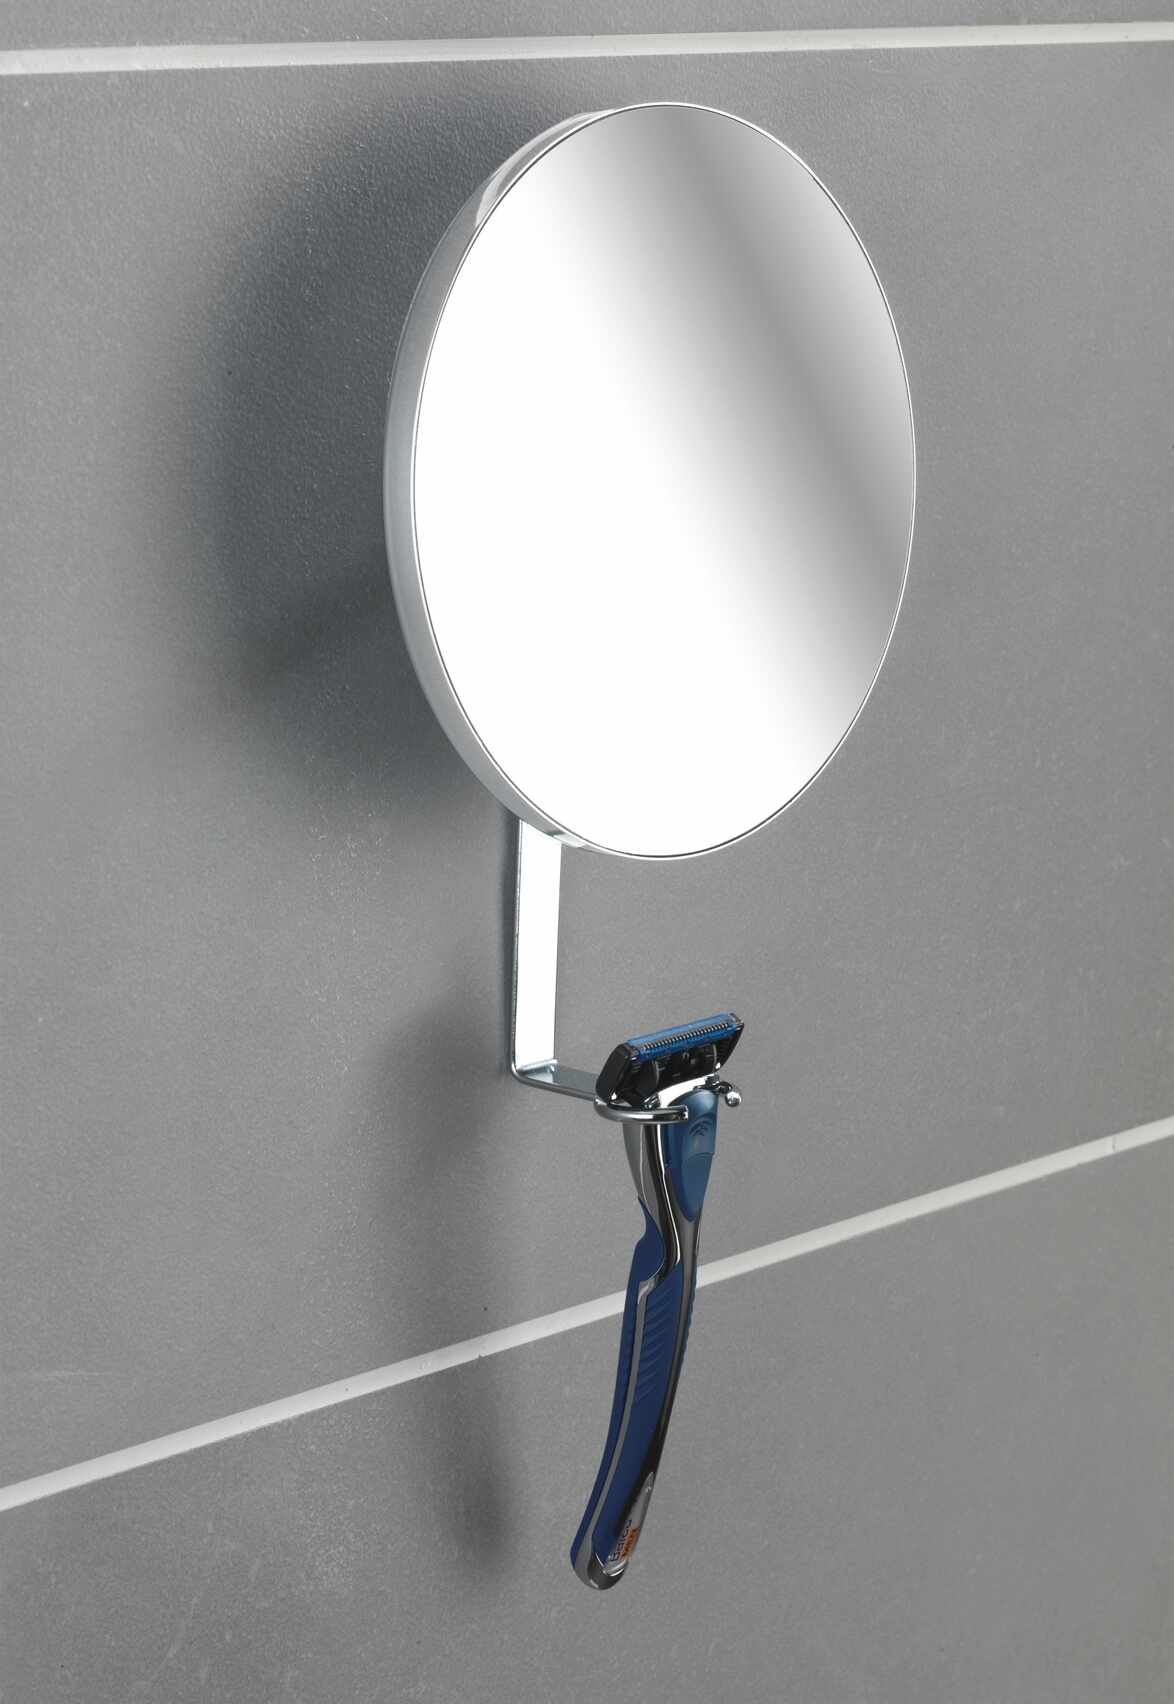 Oglinda cosmetica de perete, cu suport lama de ras, Turbo-Loc Crom, Ø17xA4xH23 cm